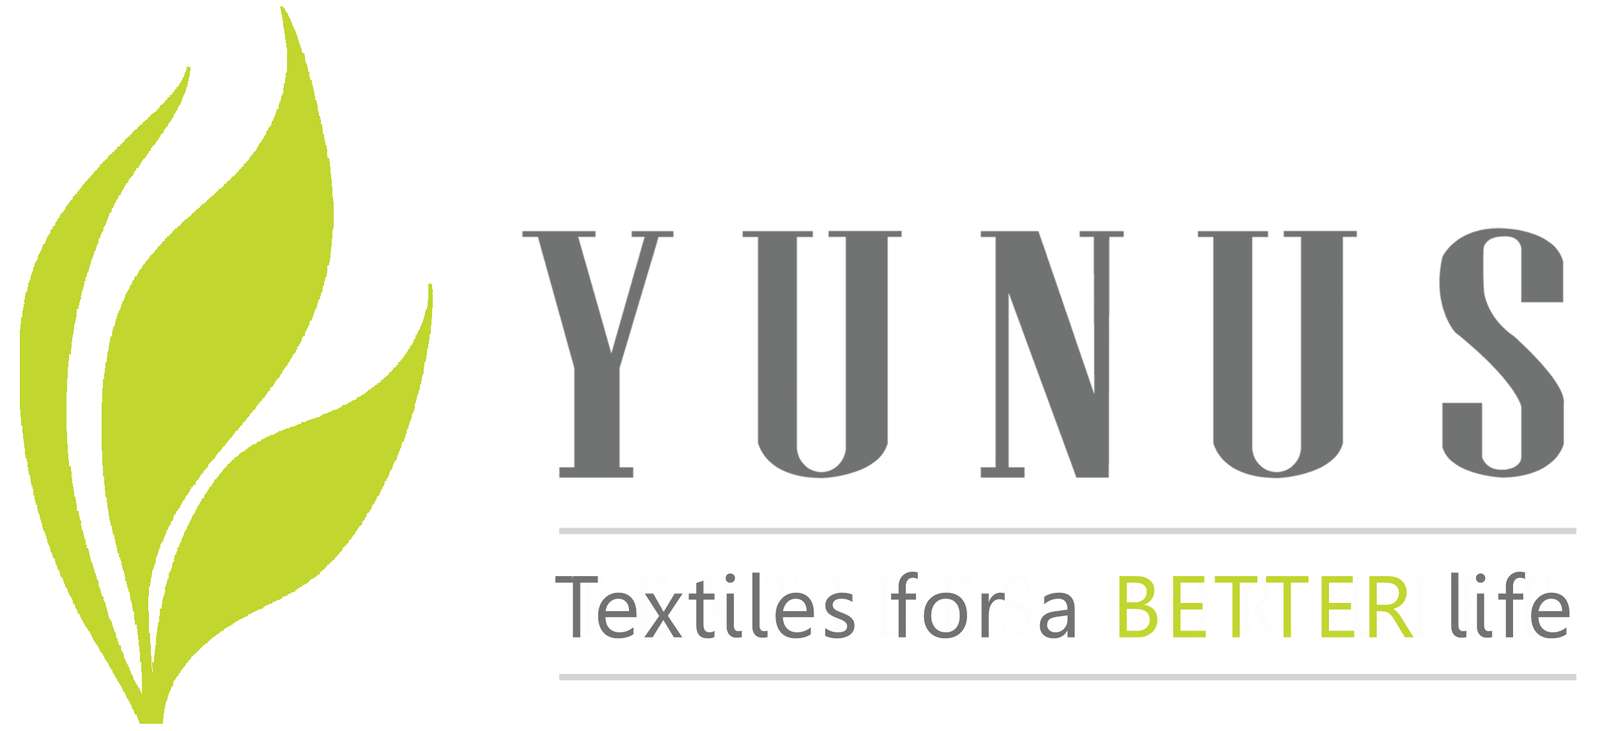 Логотип YTML пазл онлайн из фото